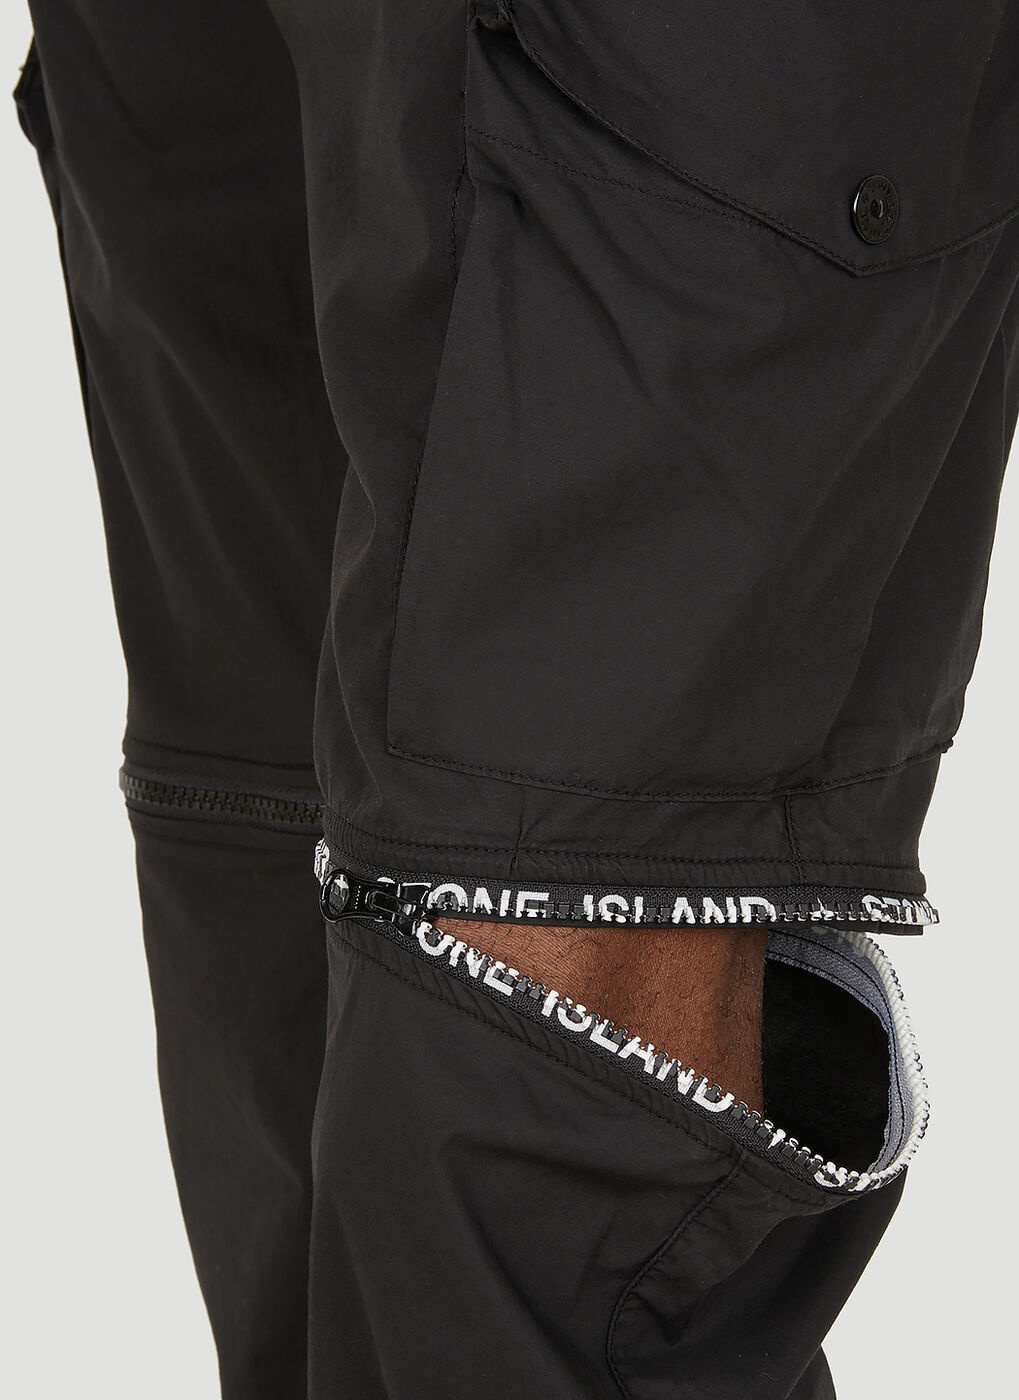 Buy oiin Zipper Mens Slim fit Knee Cut Round Pocket Black Jeans 739 32 at  Amazonin